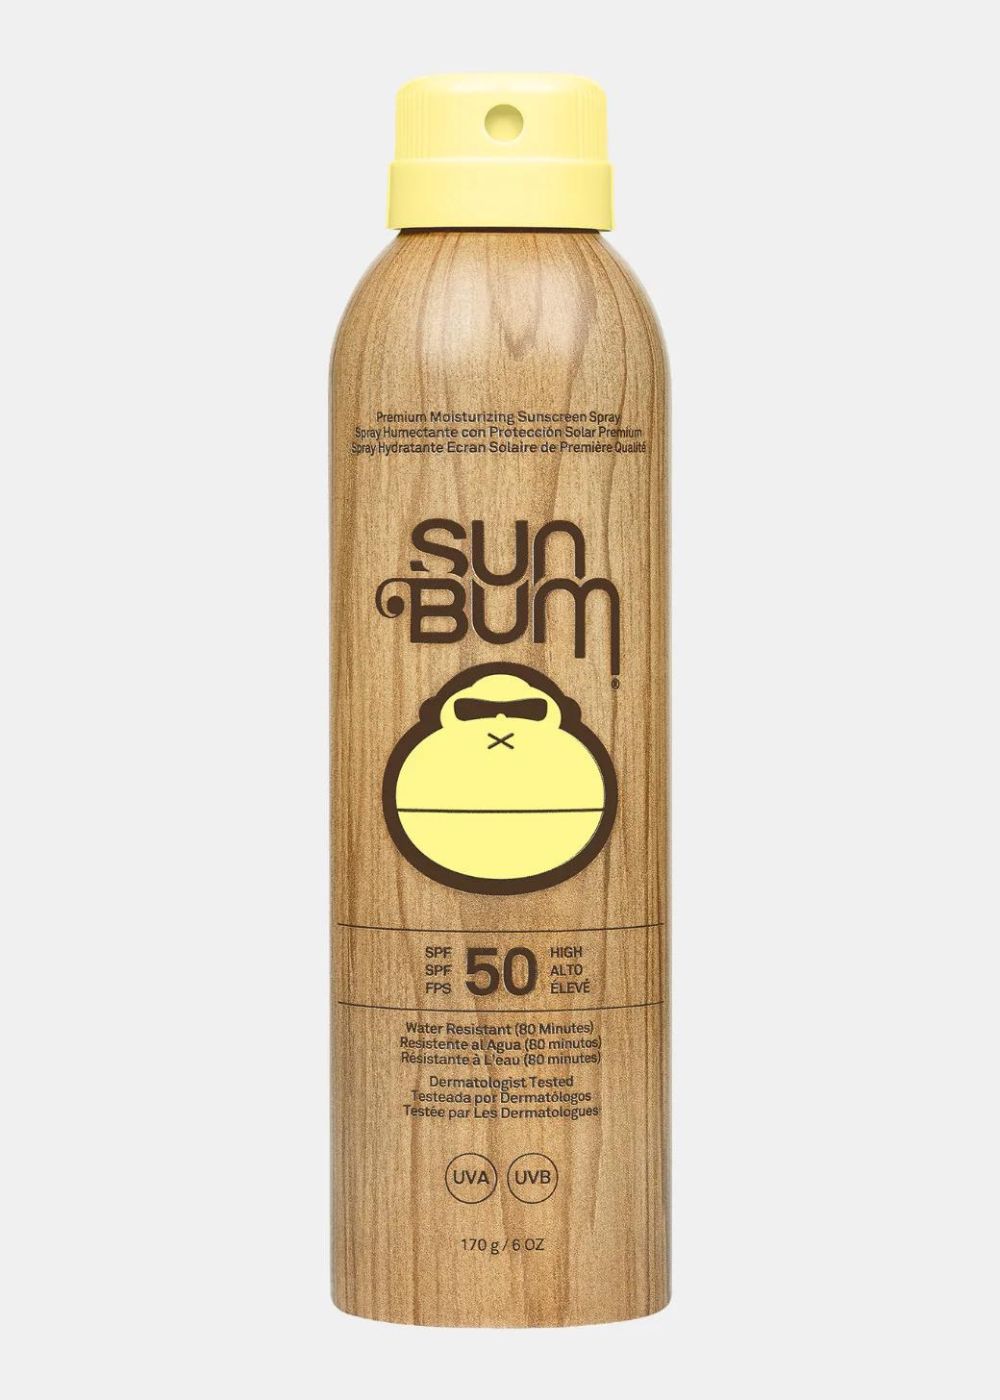 Sun Bum  Original SPF 50 Sunscreen Spray  177 mL -  קרם הגנה ספריי 50 spf